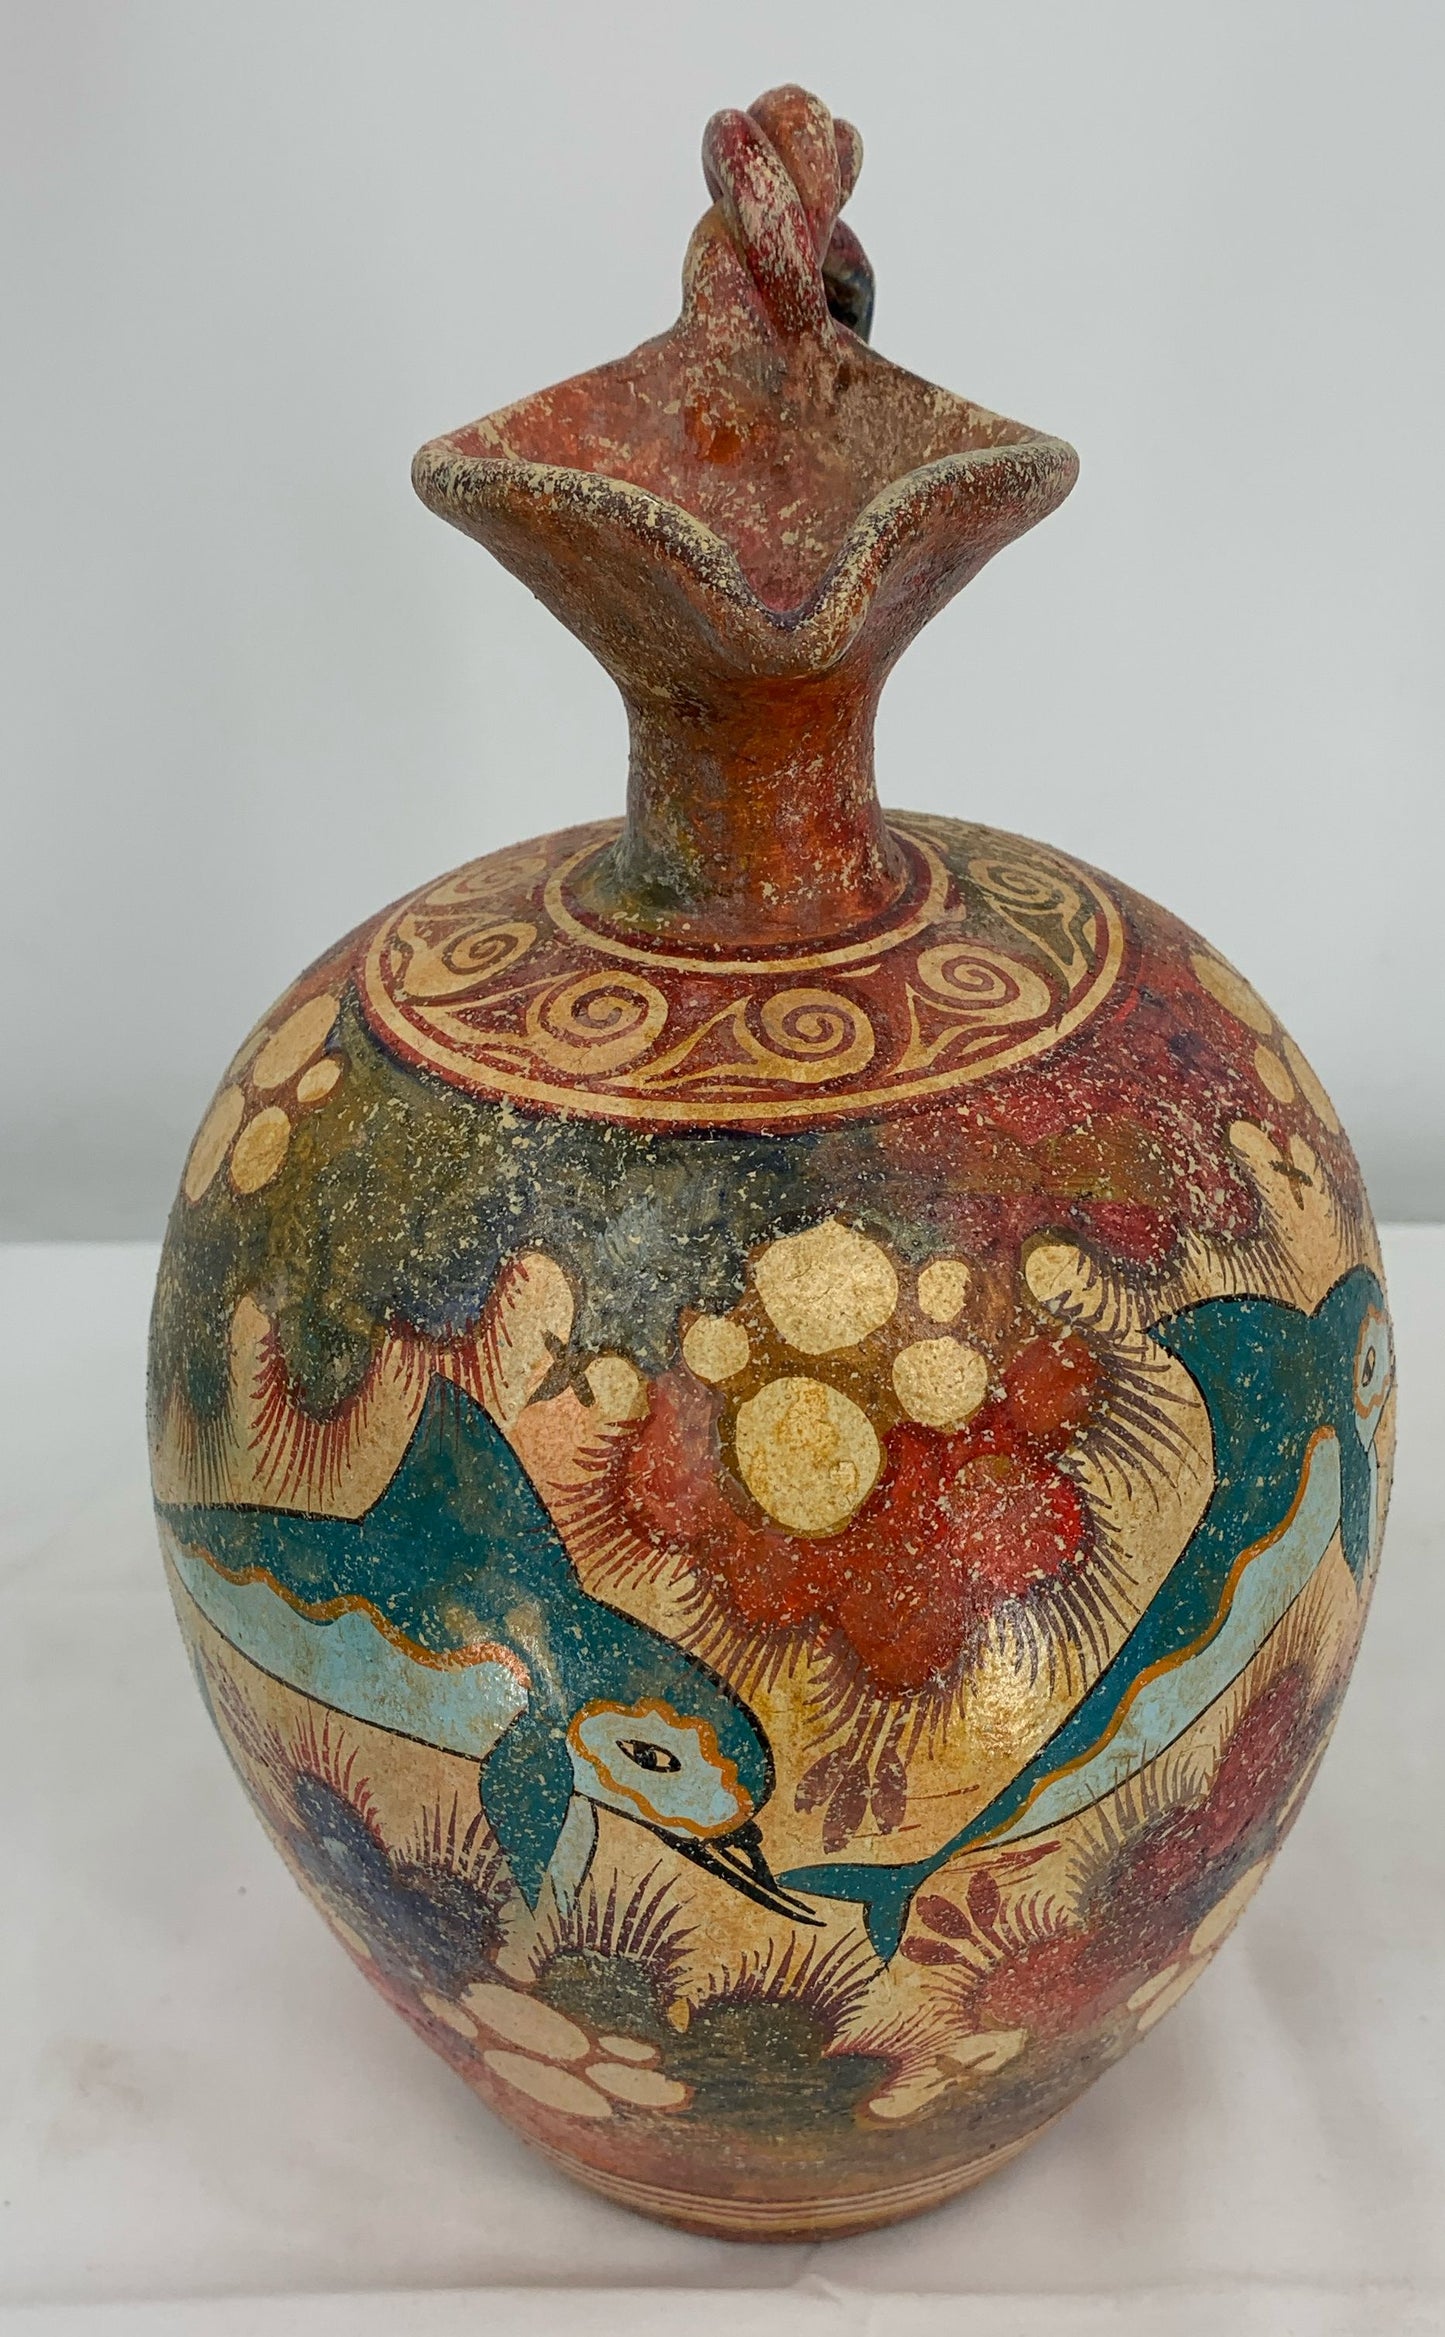 Collectible Copy Ceramic Handmade 10.5" Jug By Karmiris Minoan Period 1450 B.C.